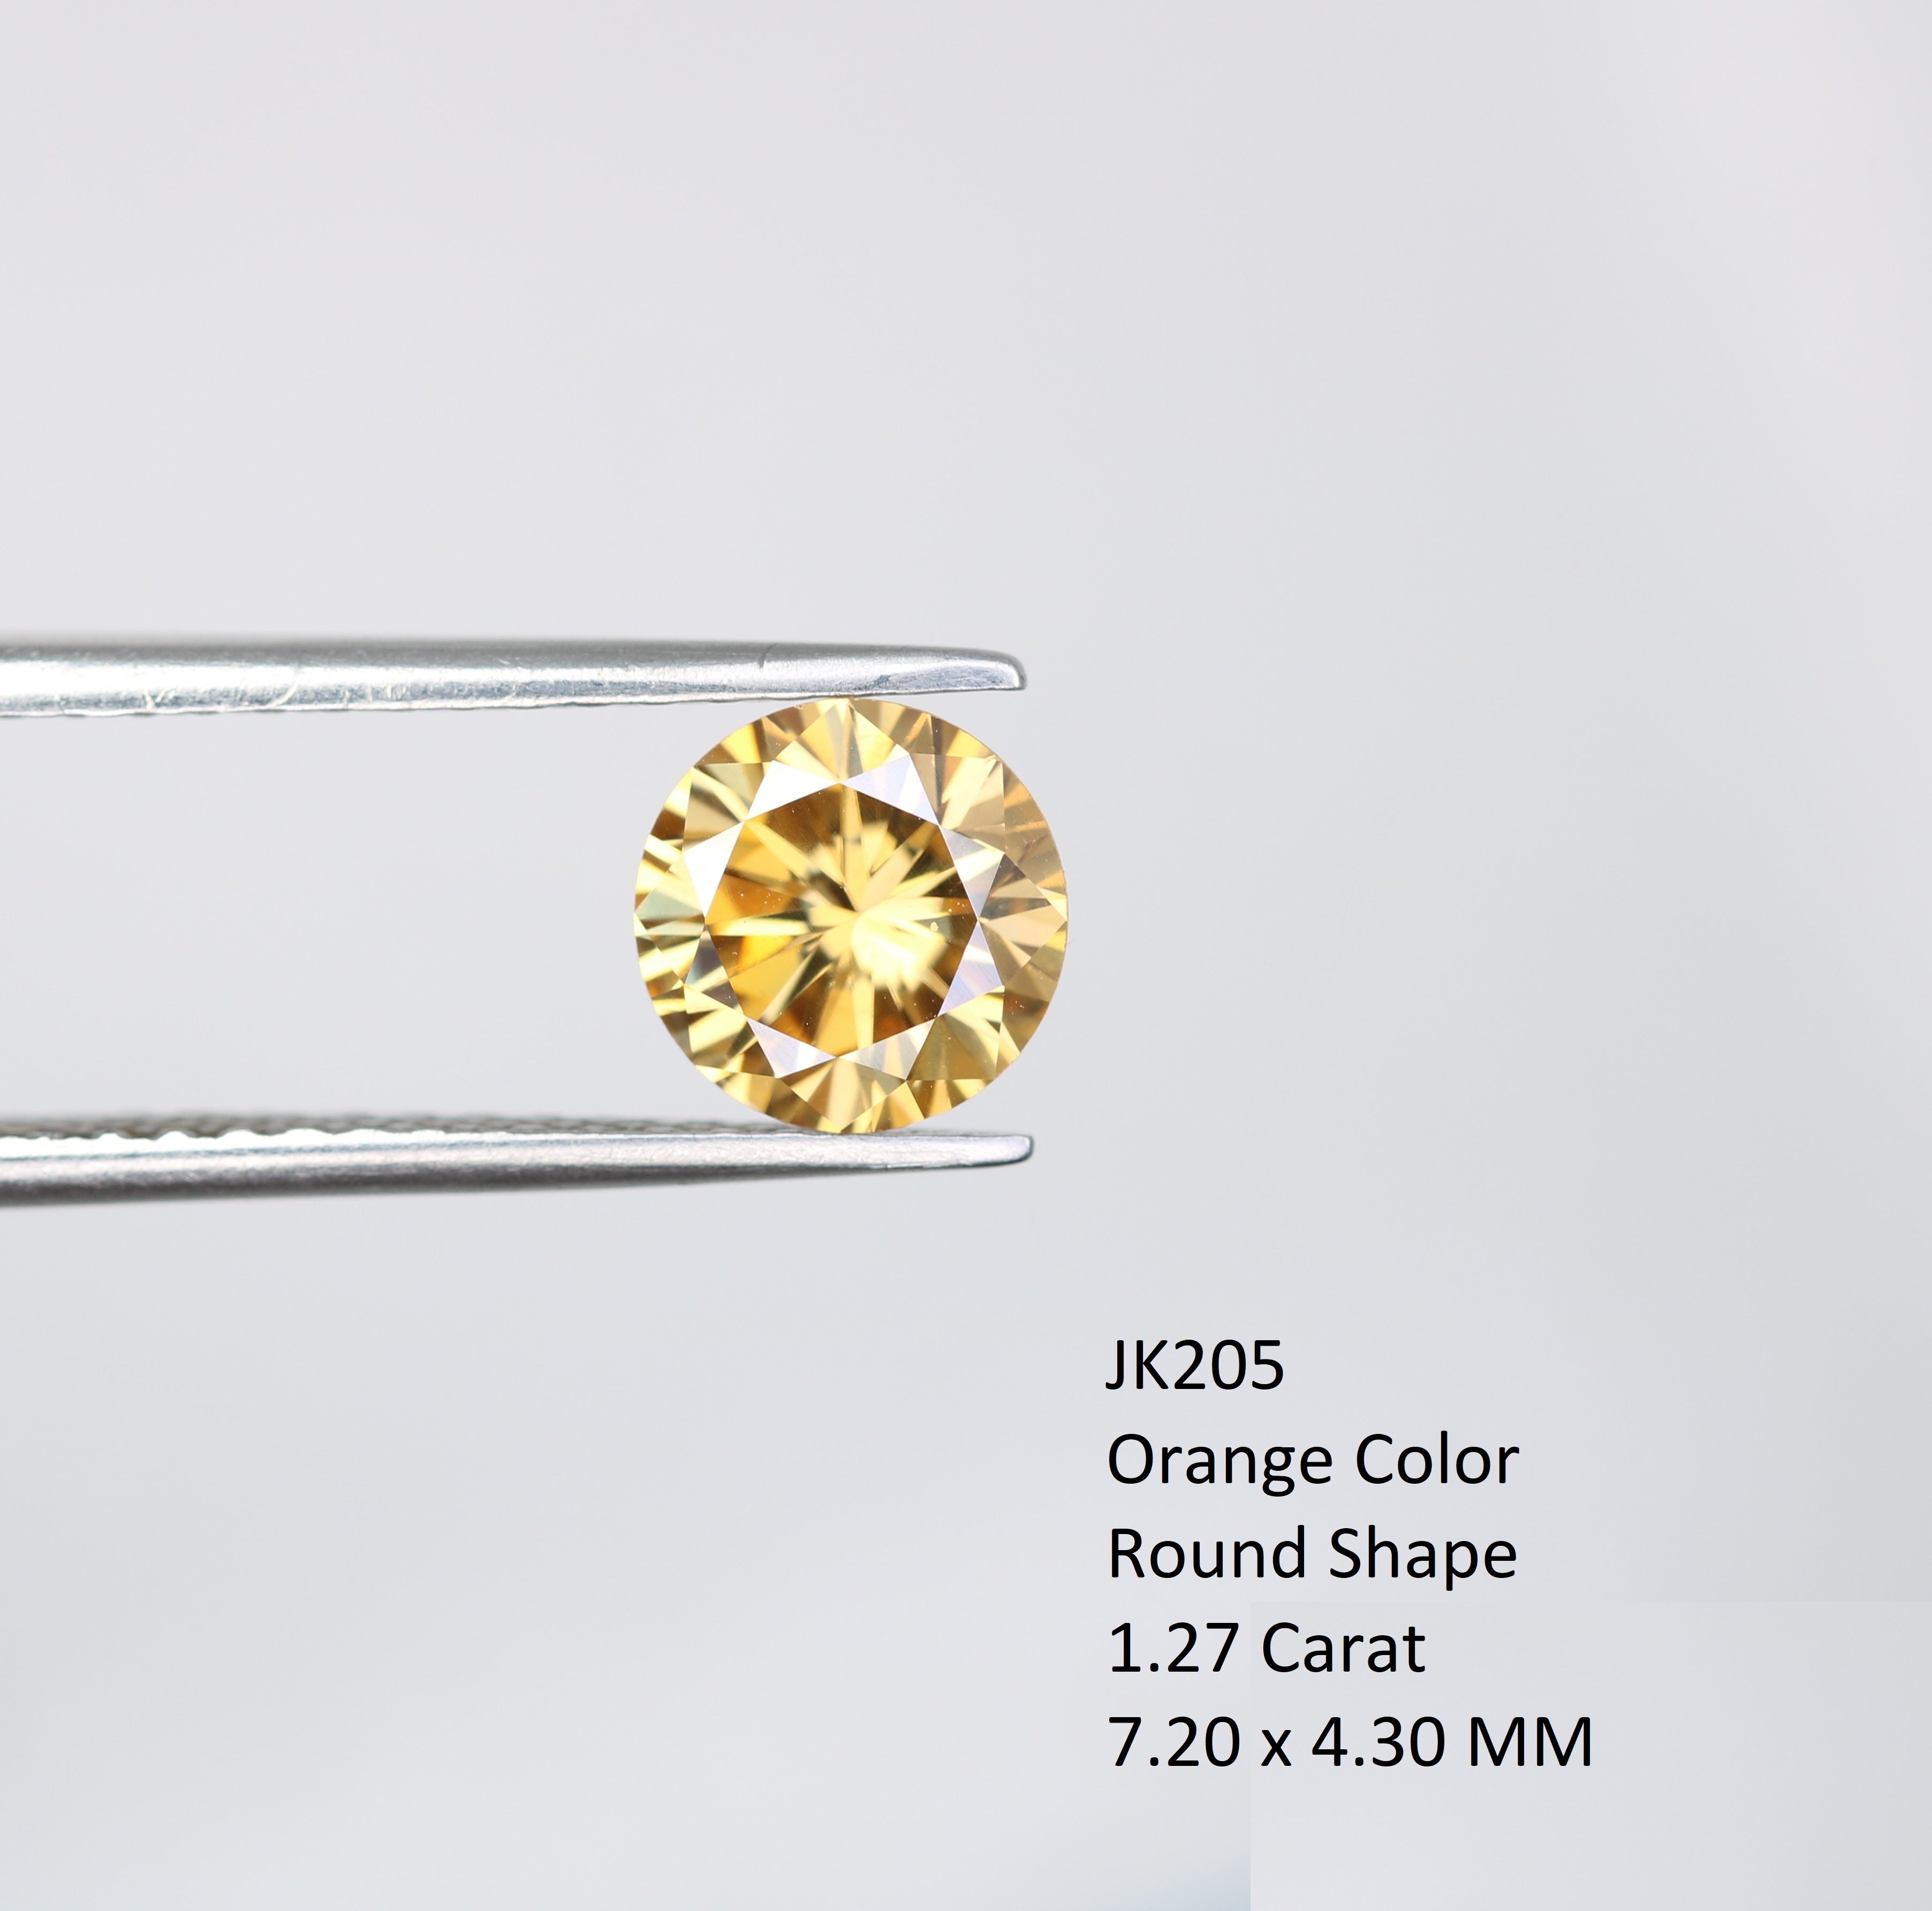 1.27 CT Orange Moissanite Round Brilliant Cut Diamond For Engagement Ring